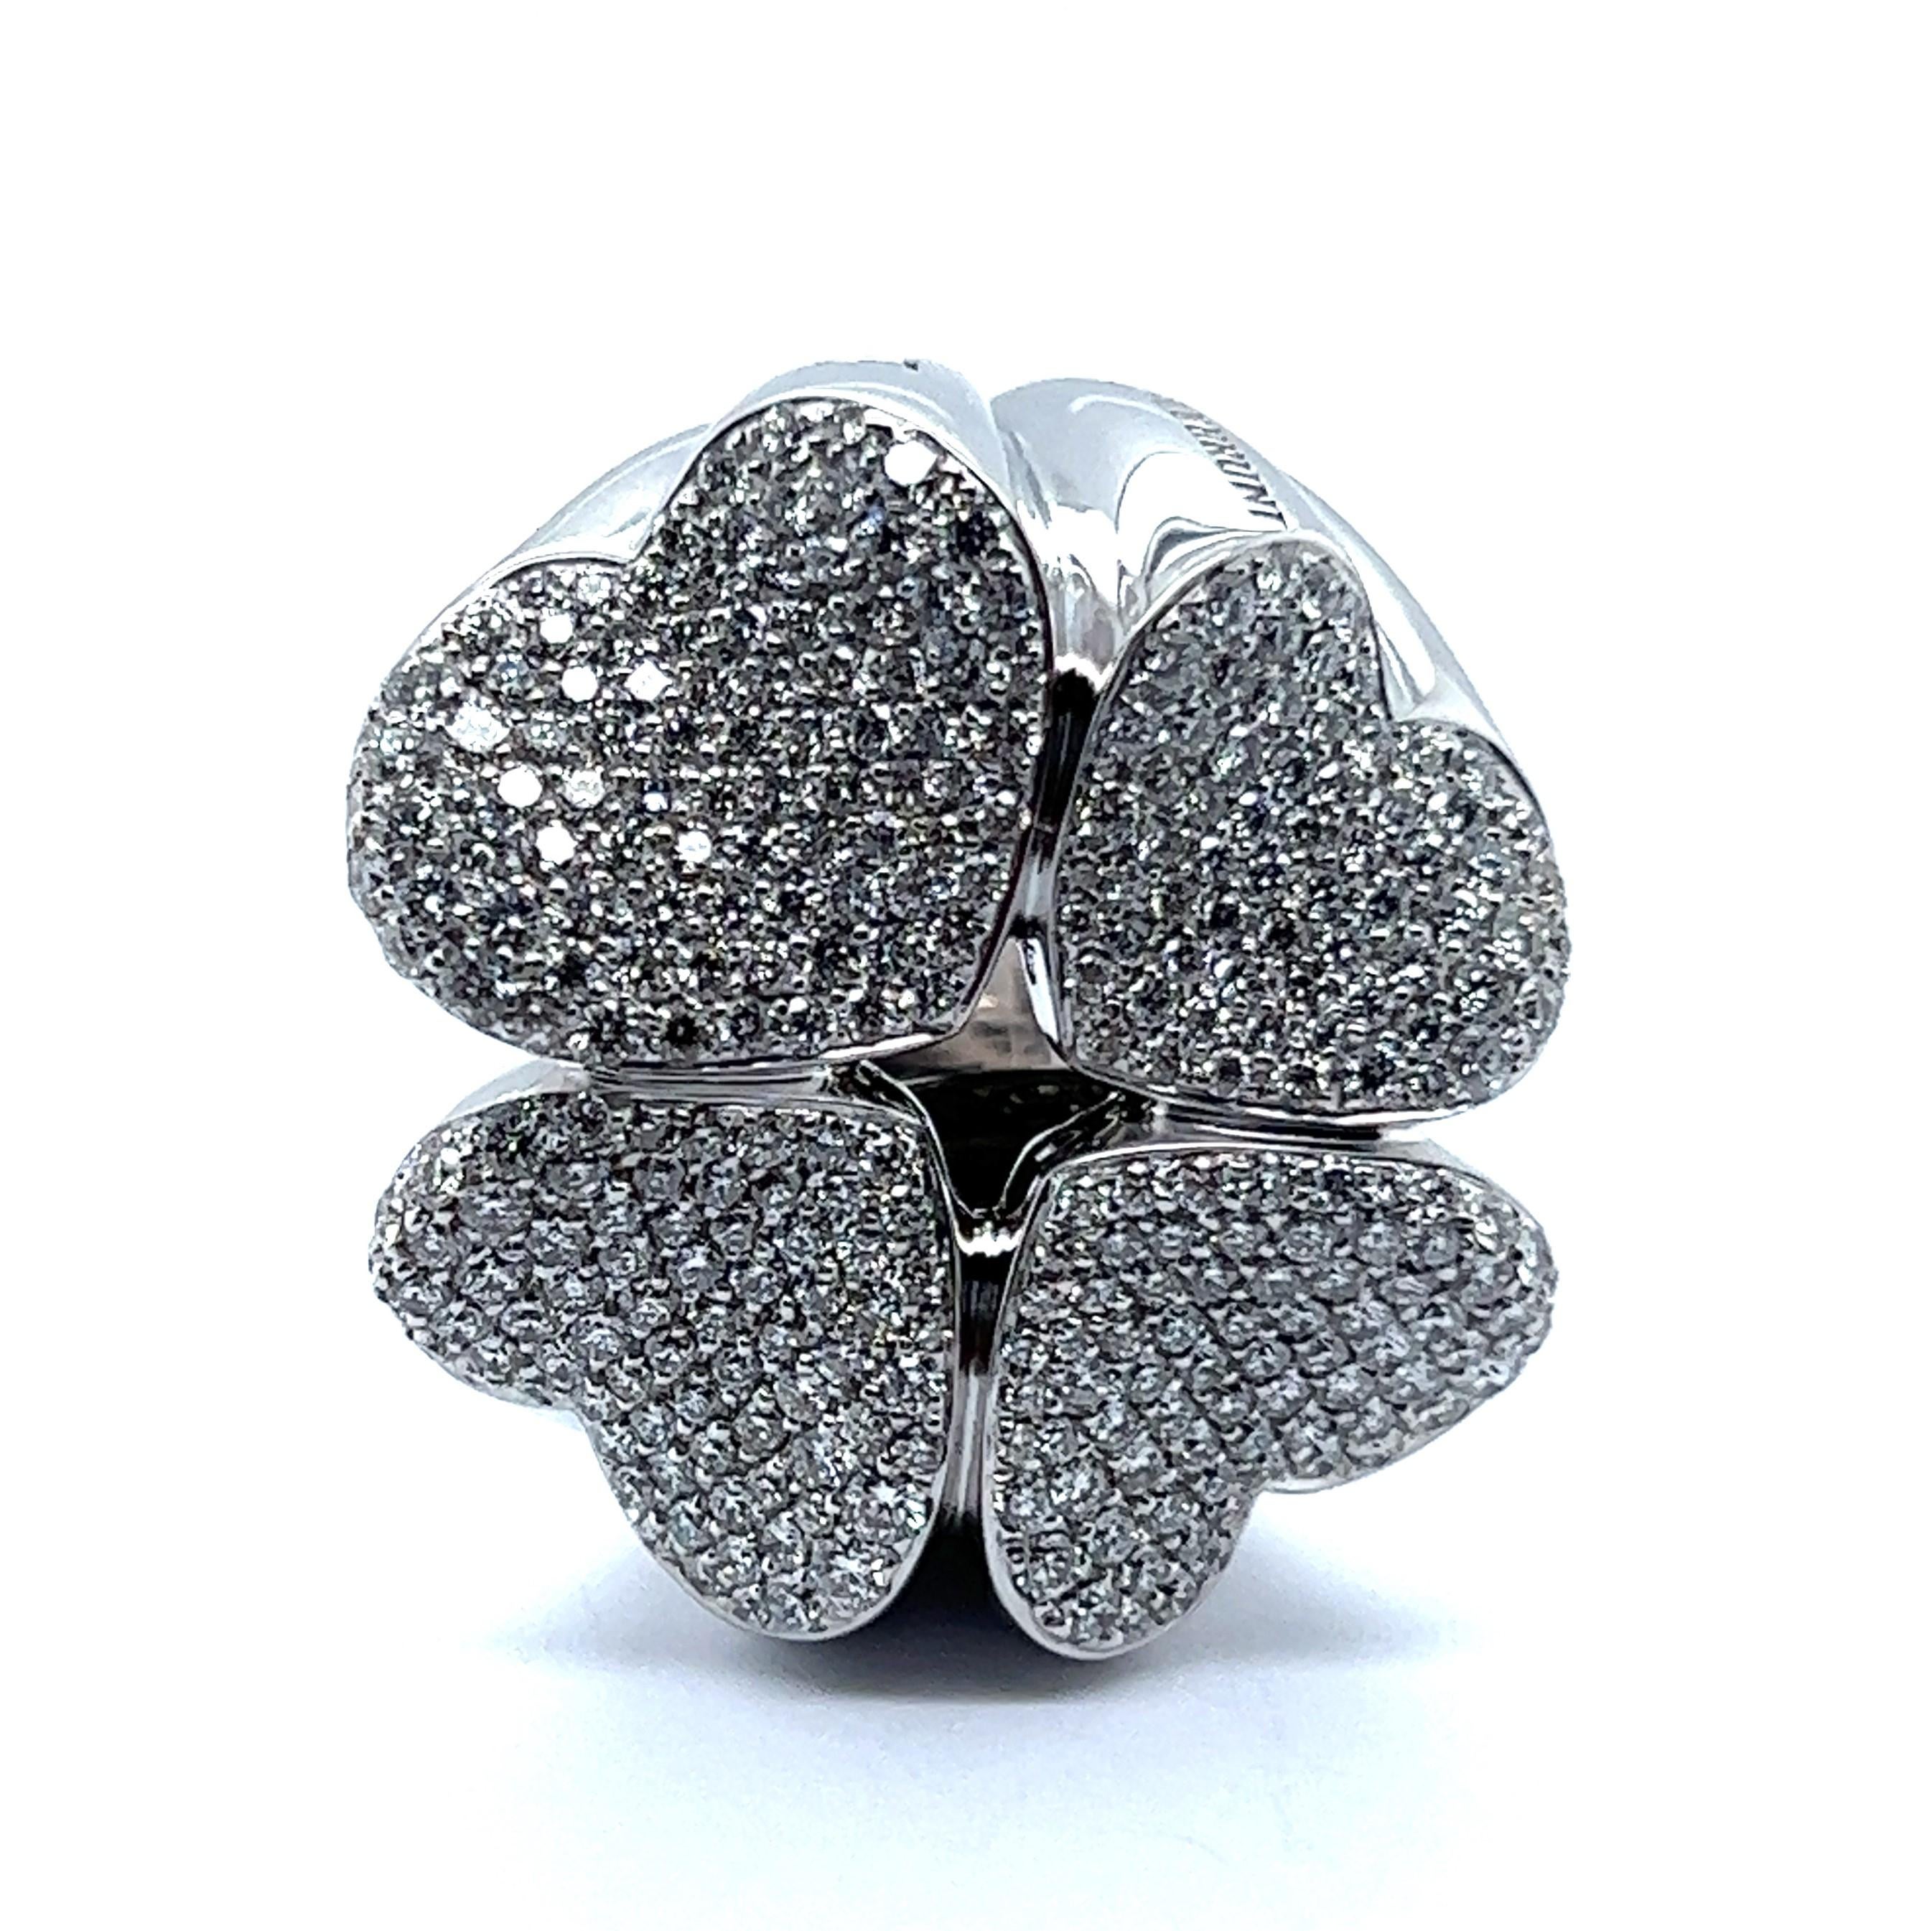 Brilliant Cut Clover Diamond Ring in 18 Karat White Gold by Pasquale Bruni